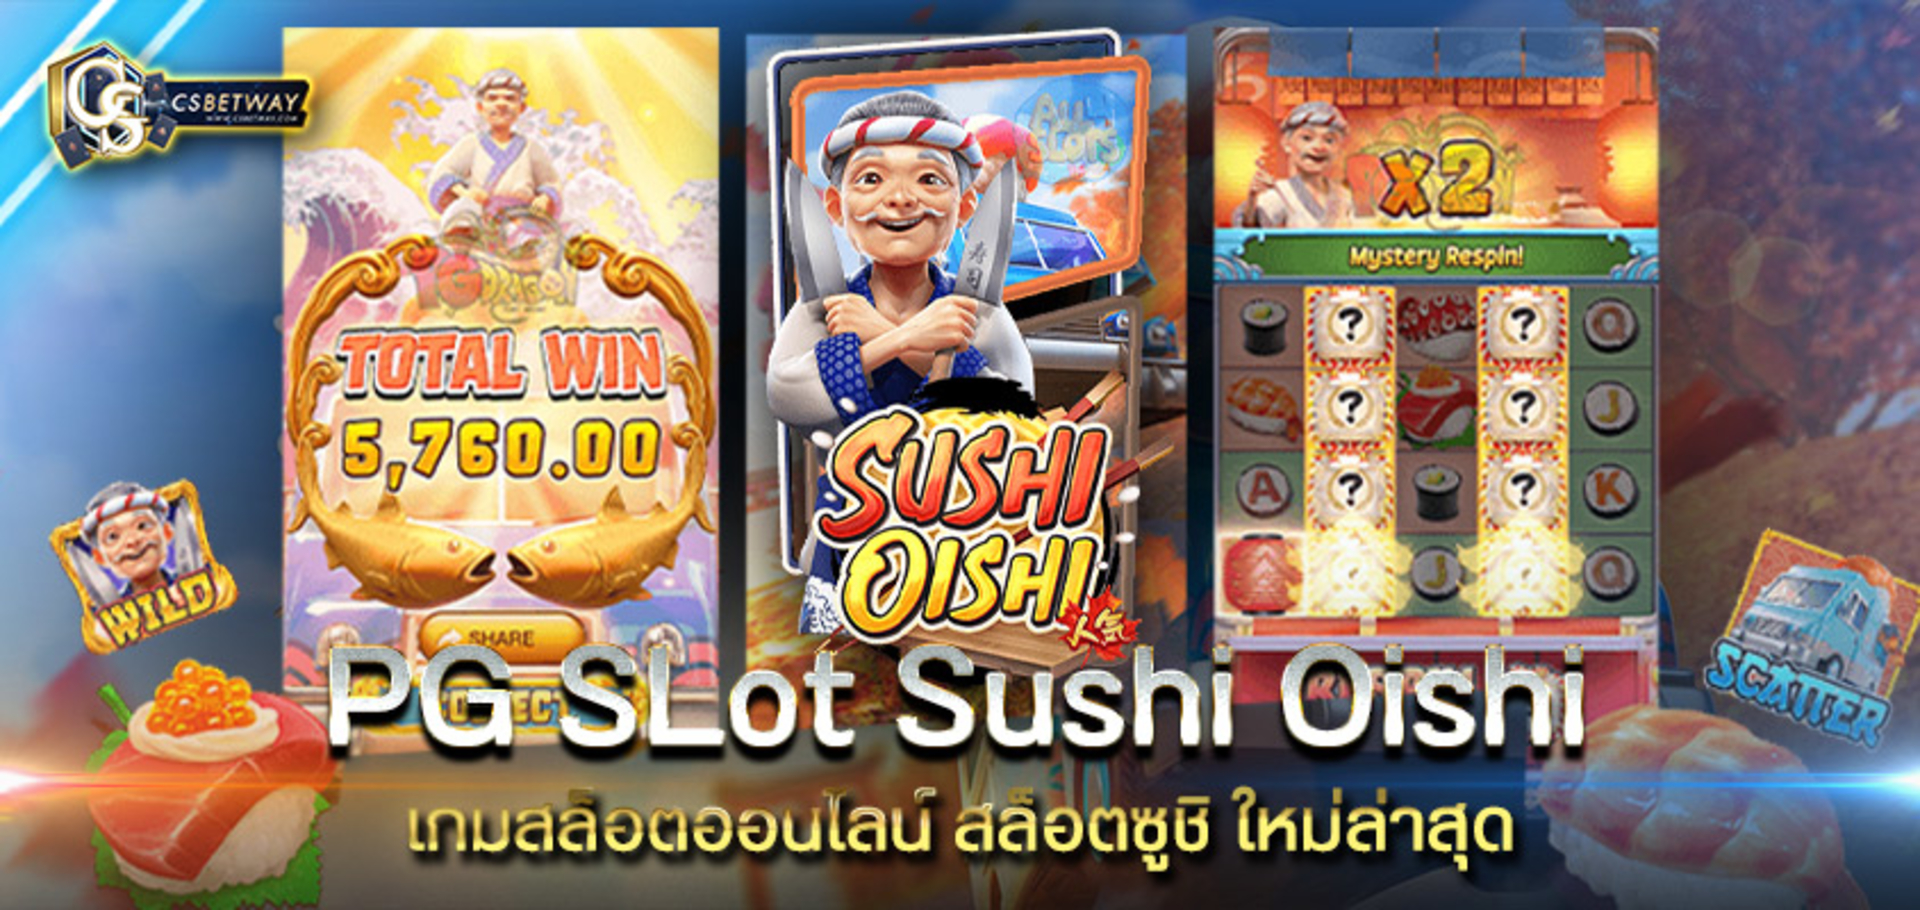 PG SLot Sushi Oishi เกมสล็อตออนไลน์ สล็อตซูชิ Sushi Oishi เกมใหม่จากค่าย PG Slot